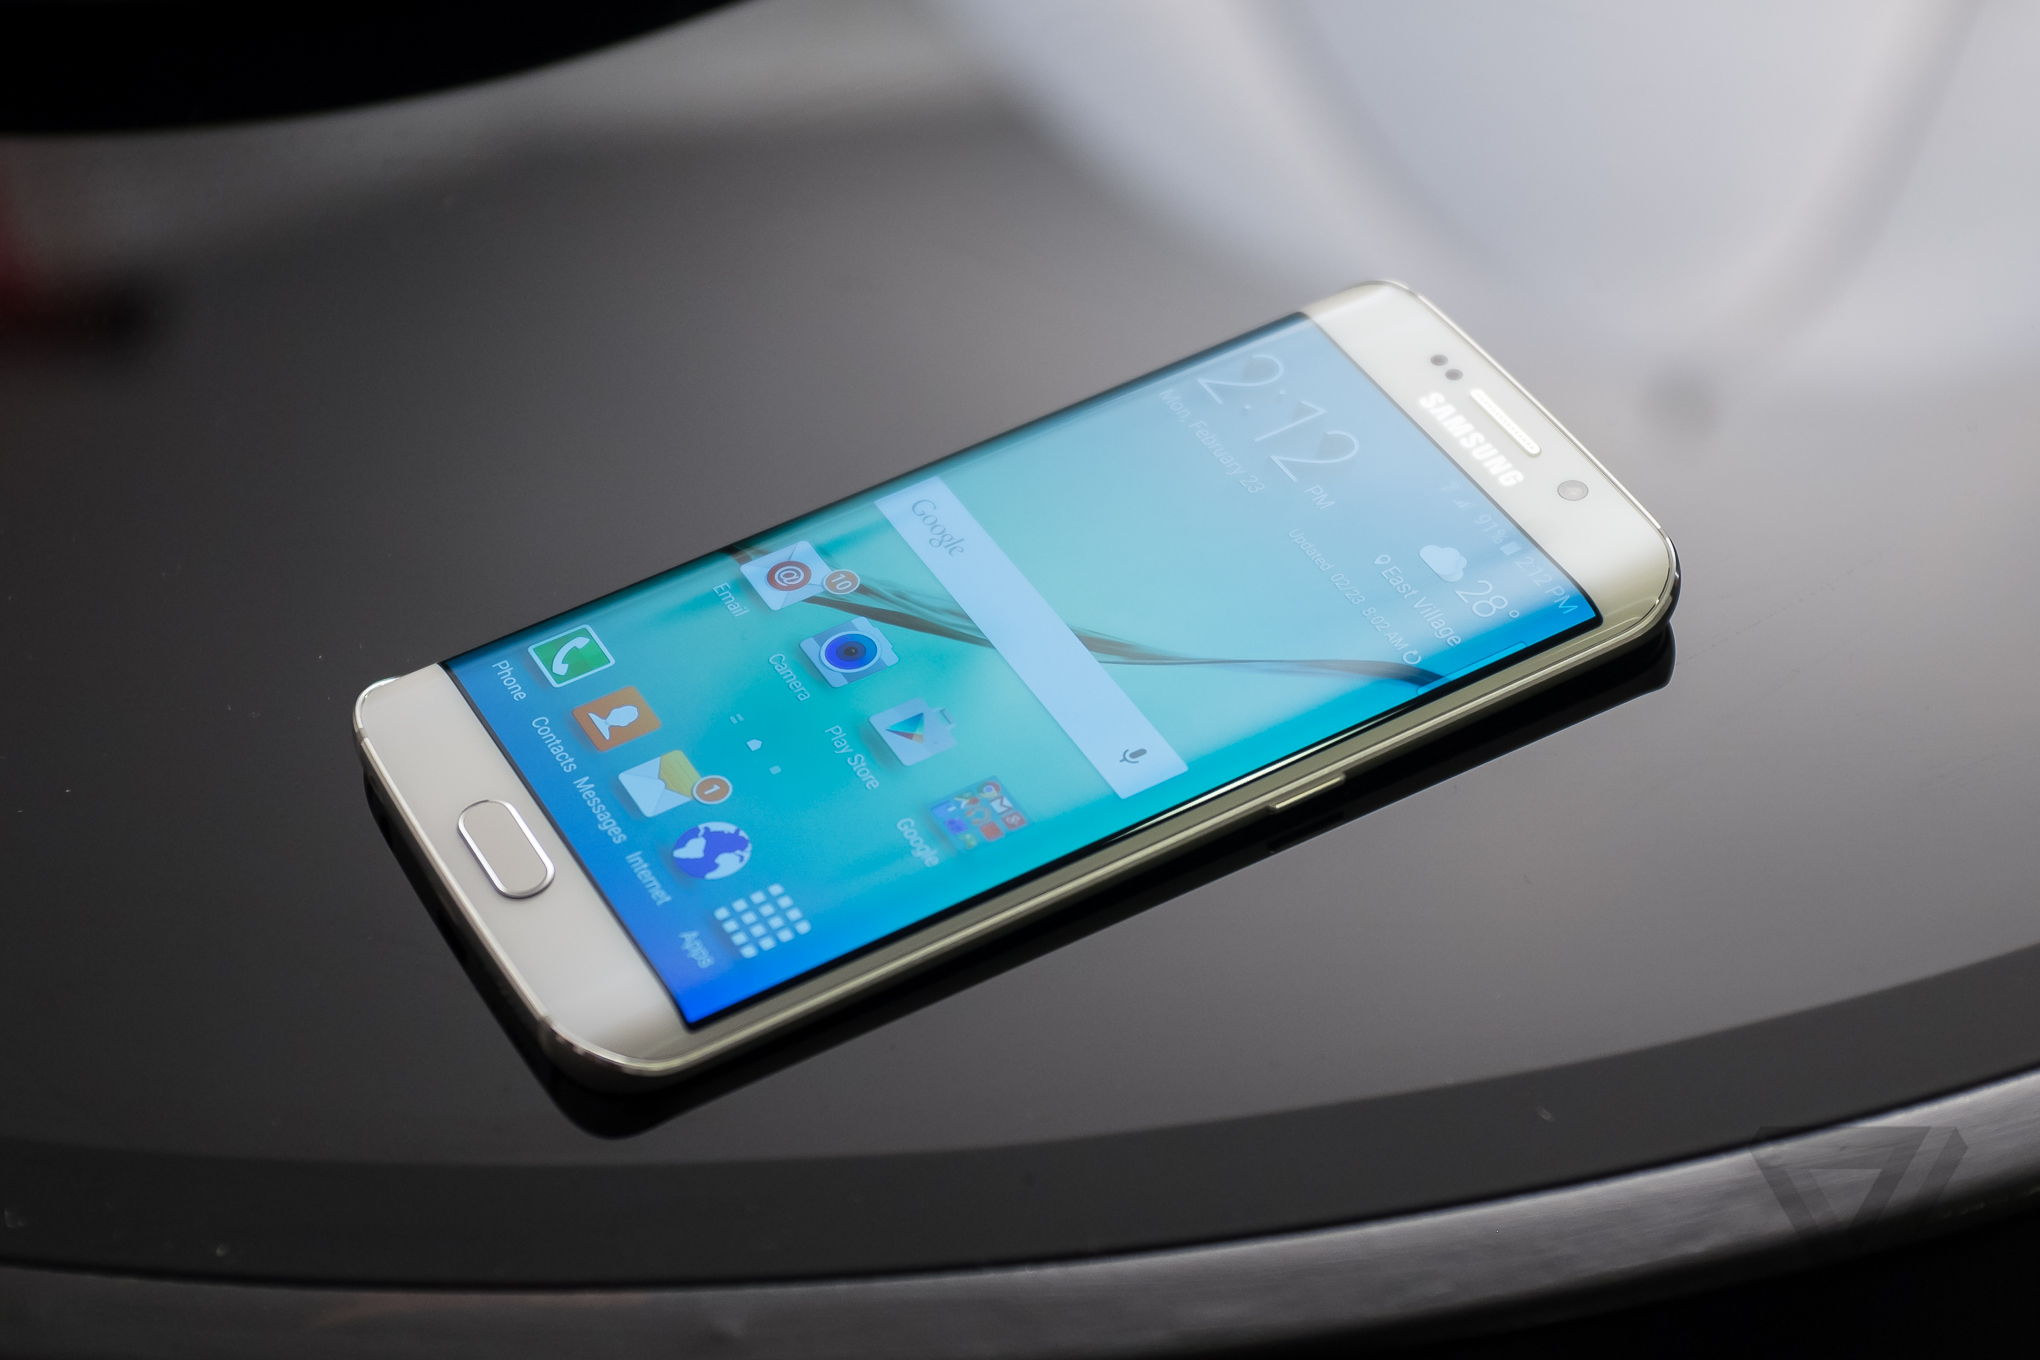 Galaxy 6 3. Смартфон Samsung Galaxy s6 Edge. Samsung Galaxy s6 Edge 2015. Самсунг с выпуклым экраном s6 Edge. Самсунг галакси с 6 с изогнутым экраном.